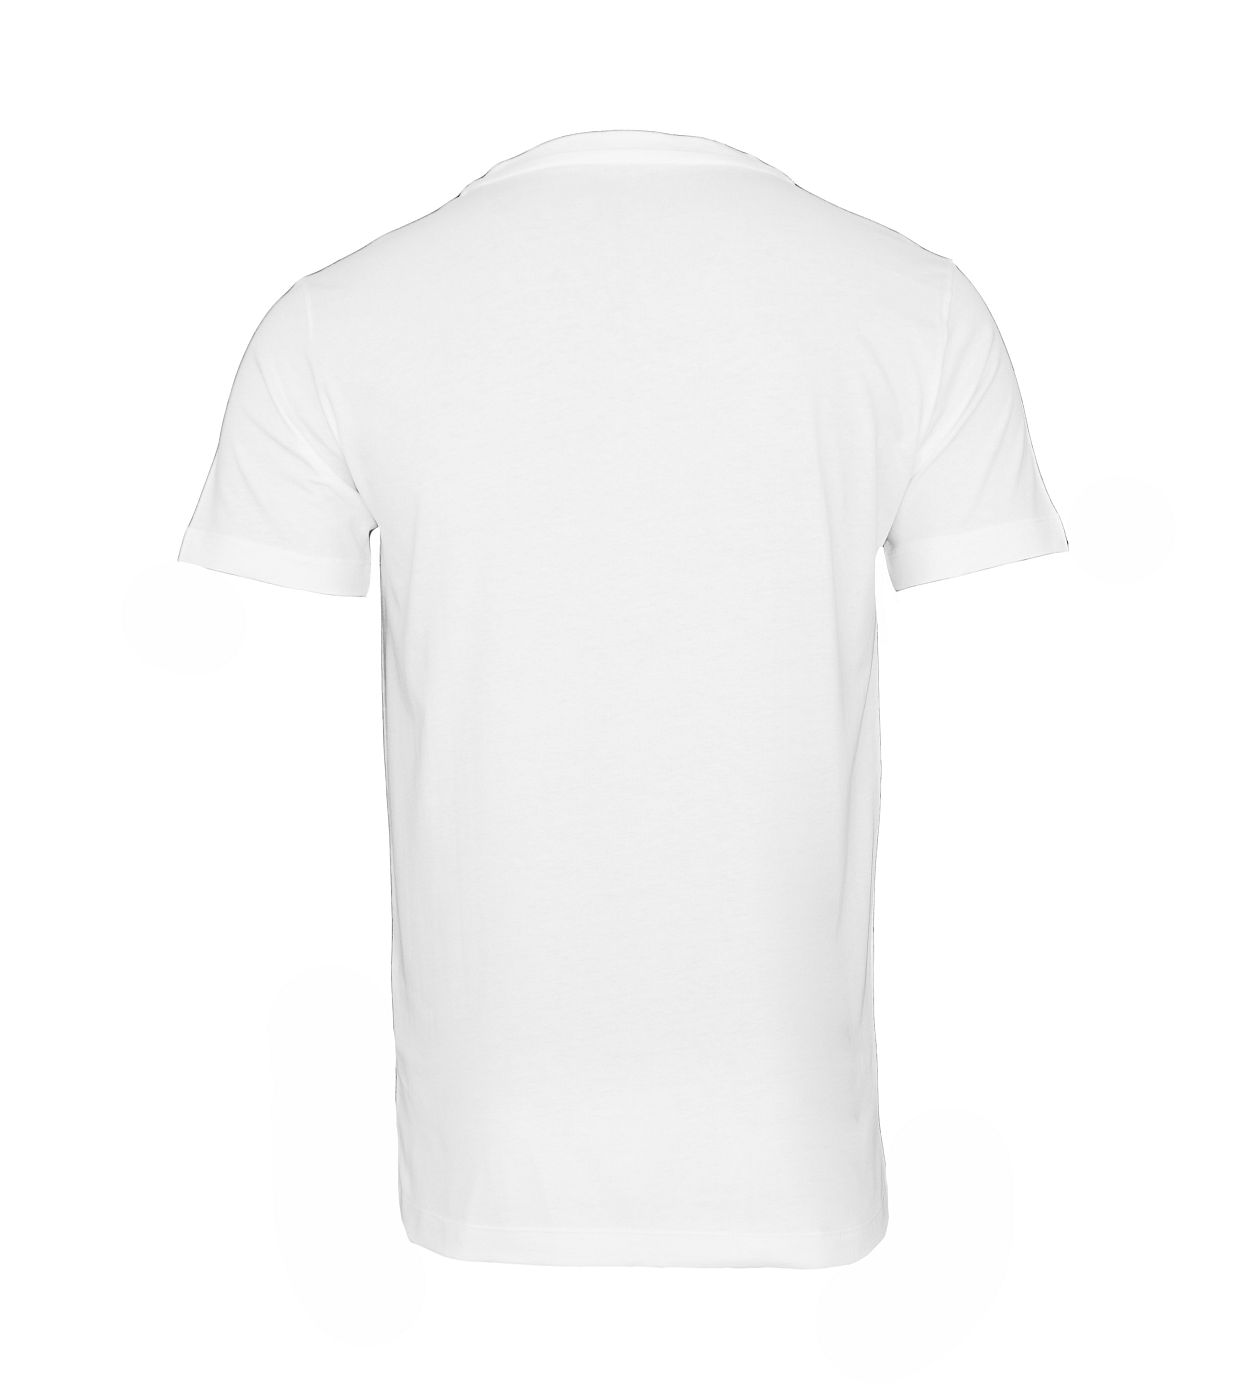 Replay 2er Pack T-Shirts Rundhals M3588 22602 040 black, white S18-RPT1